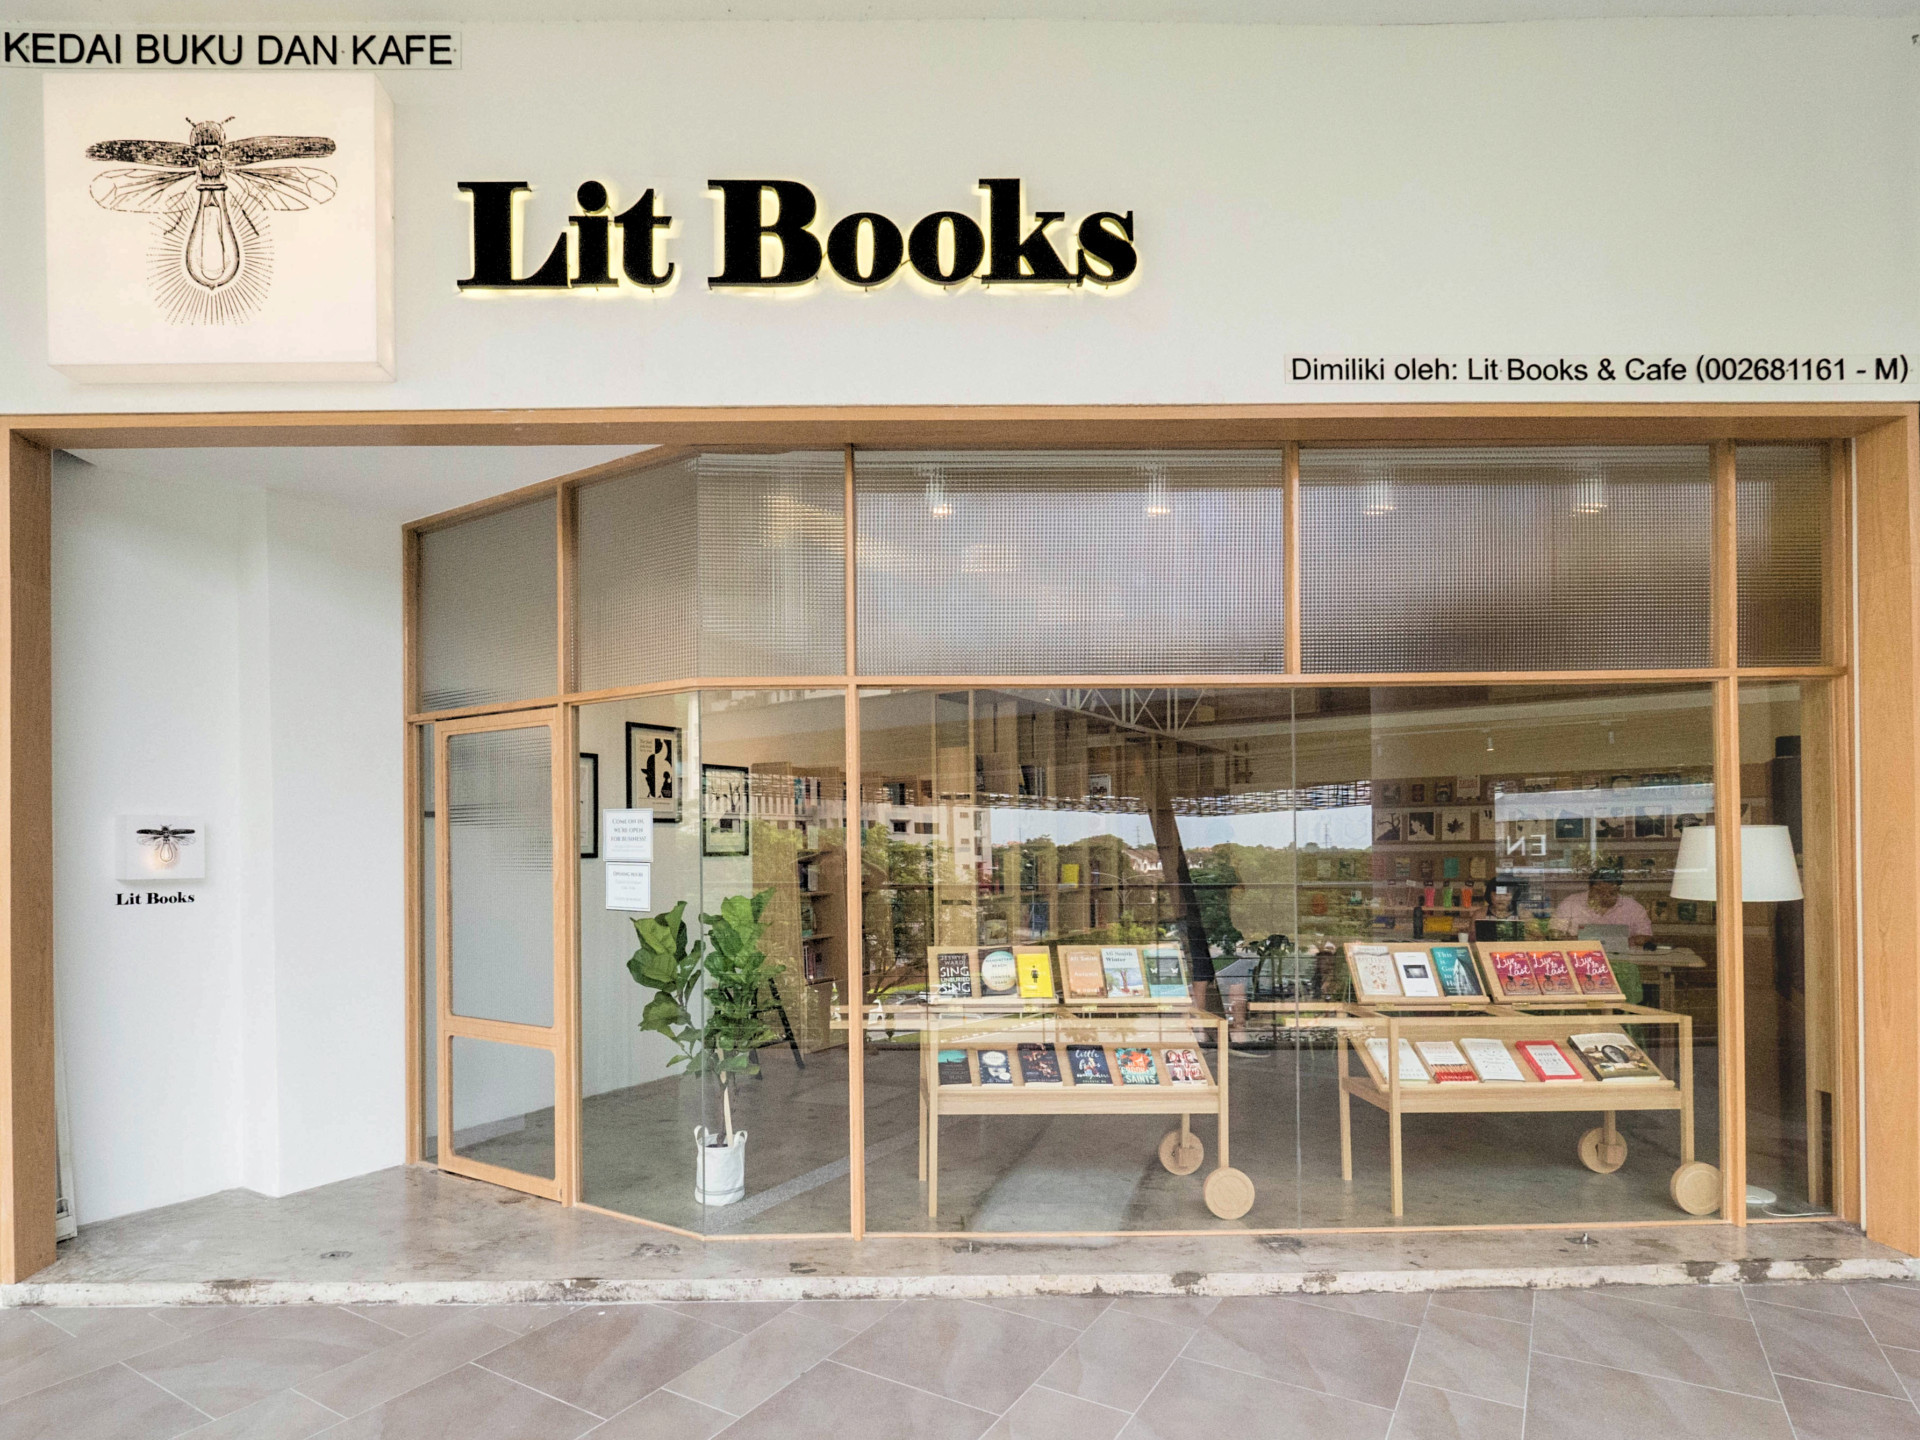 Lit Books KL